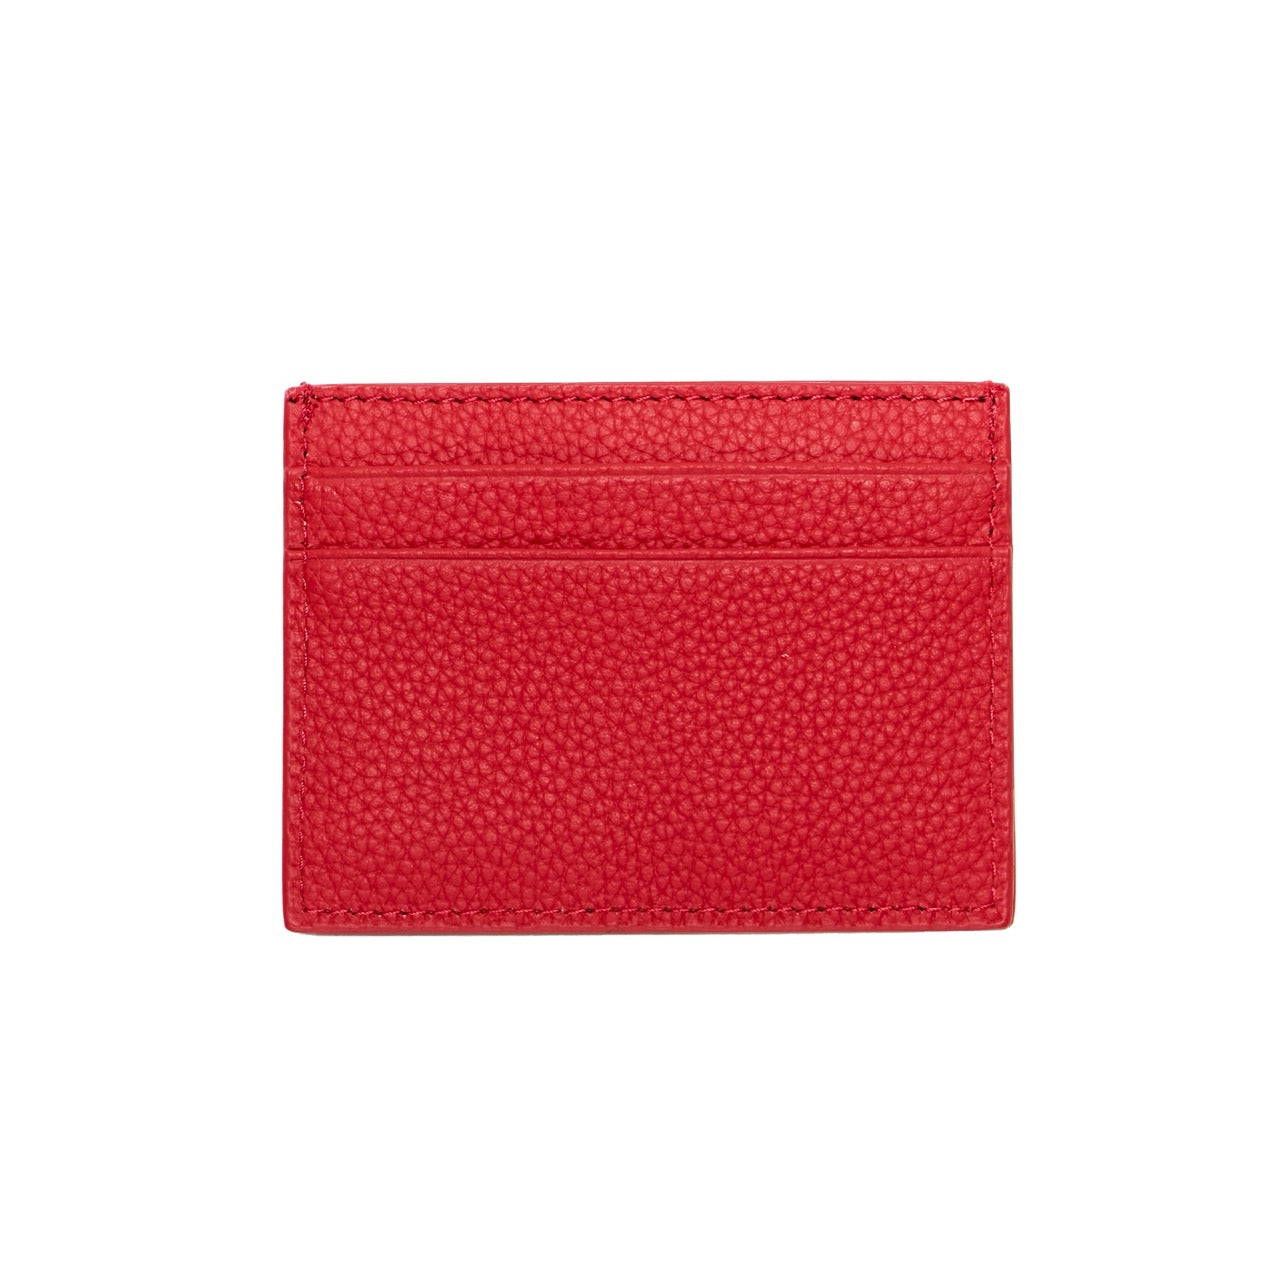 Slim Elegance, Maximum Security: Ivory & Ebony Red Card Holder - 100% Genuine Leather, RFID Blocking - Redefine Your Wallet Experience.